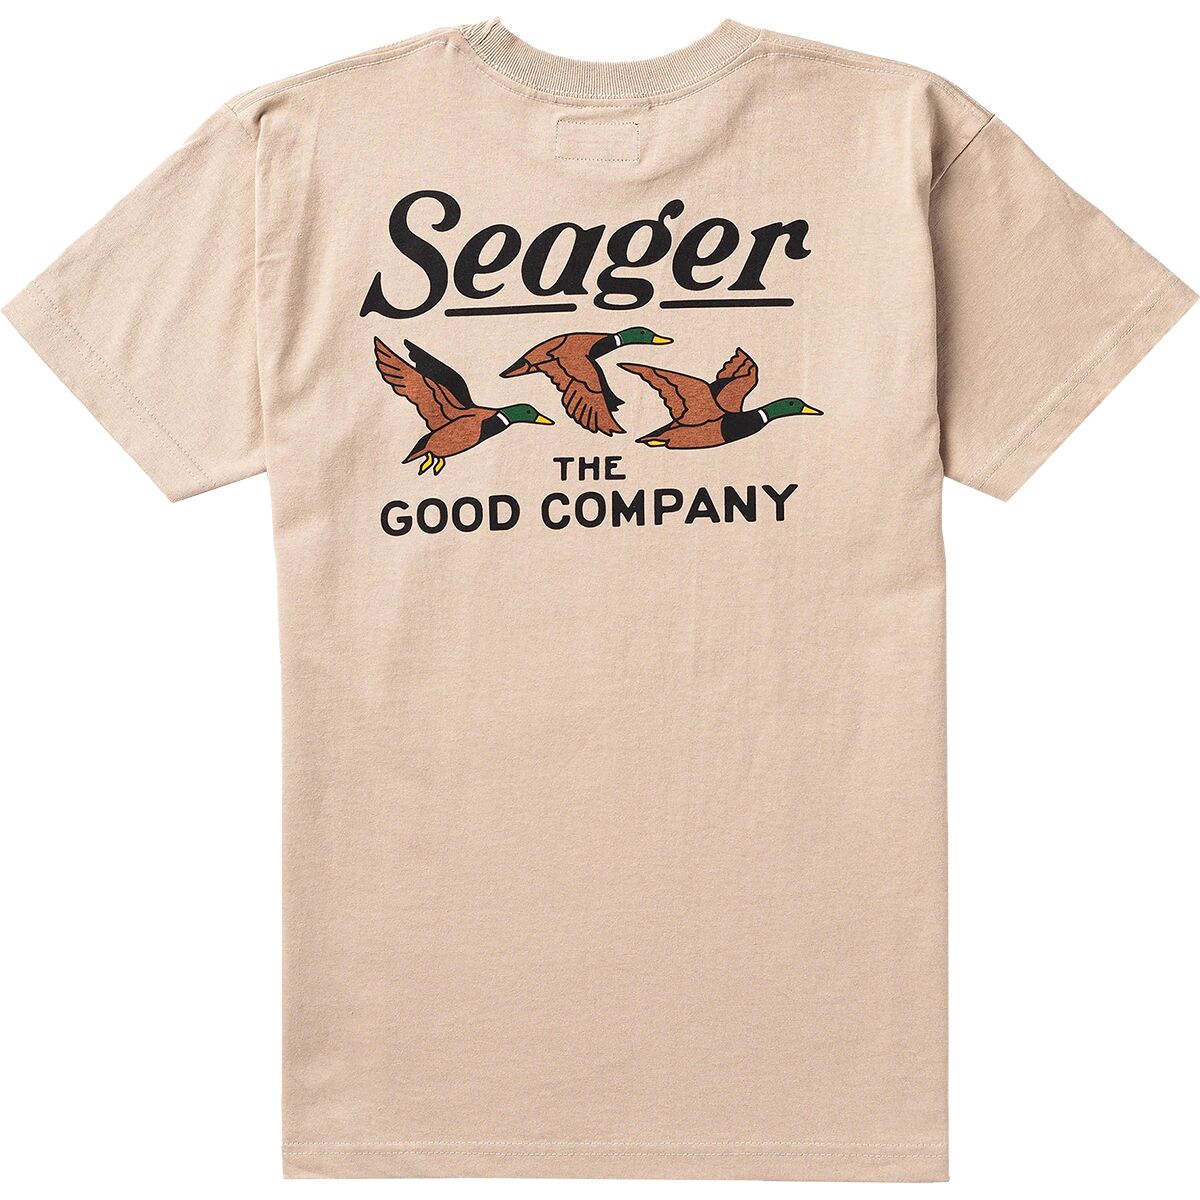 The Good Company T-Shirt - Men